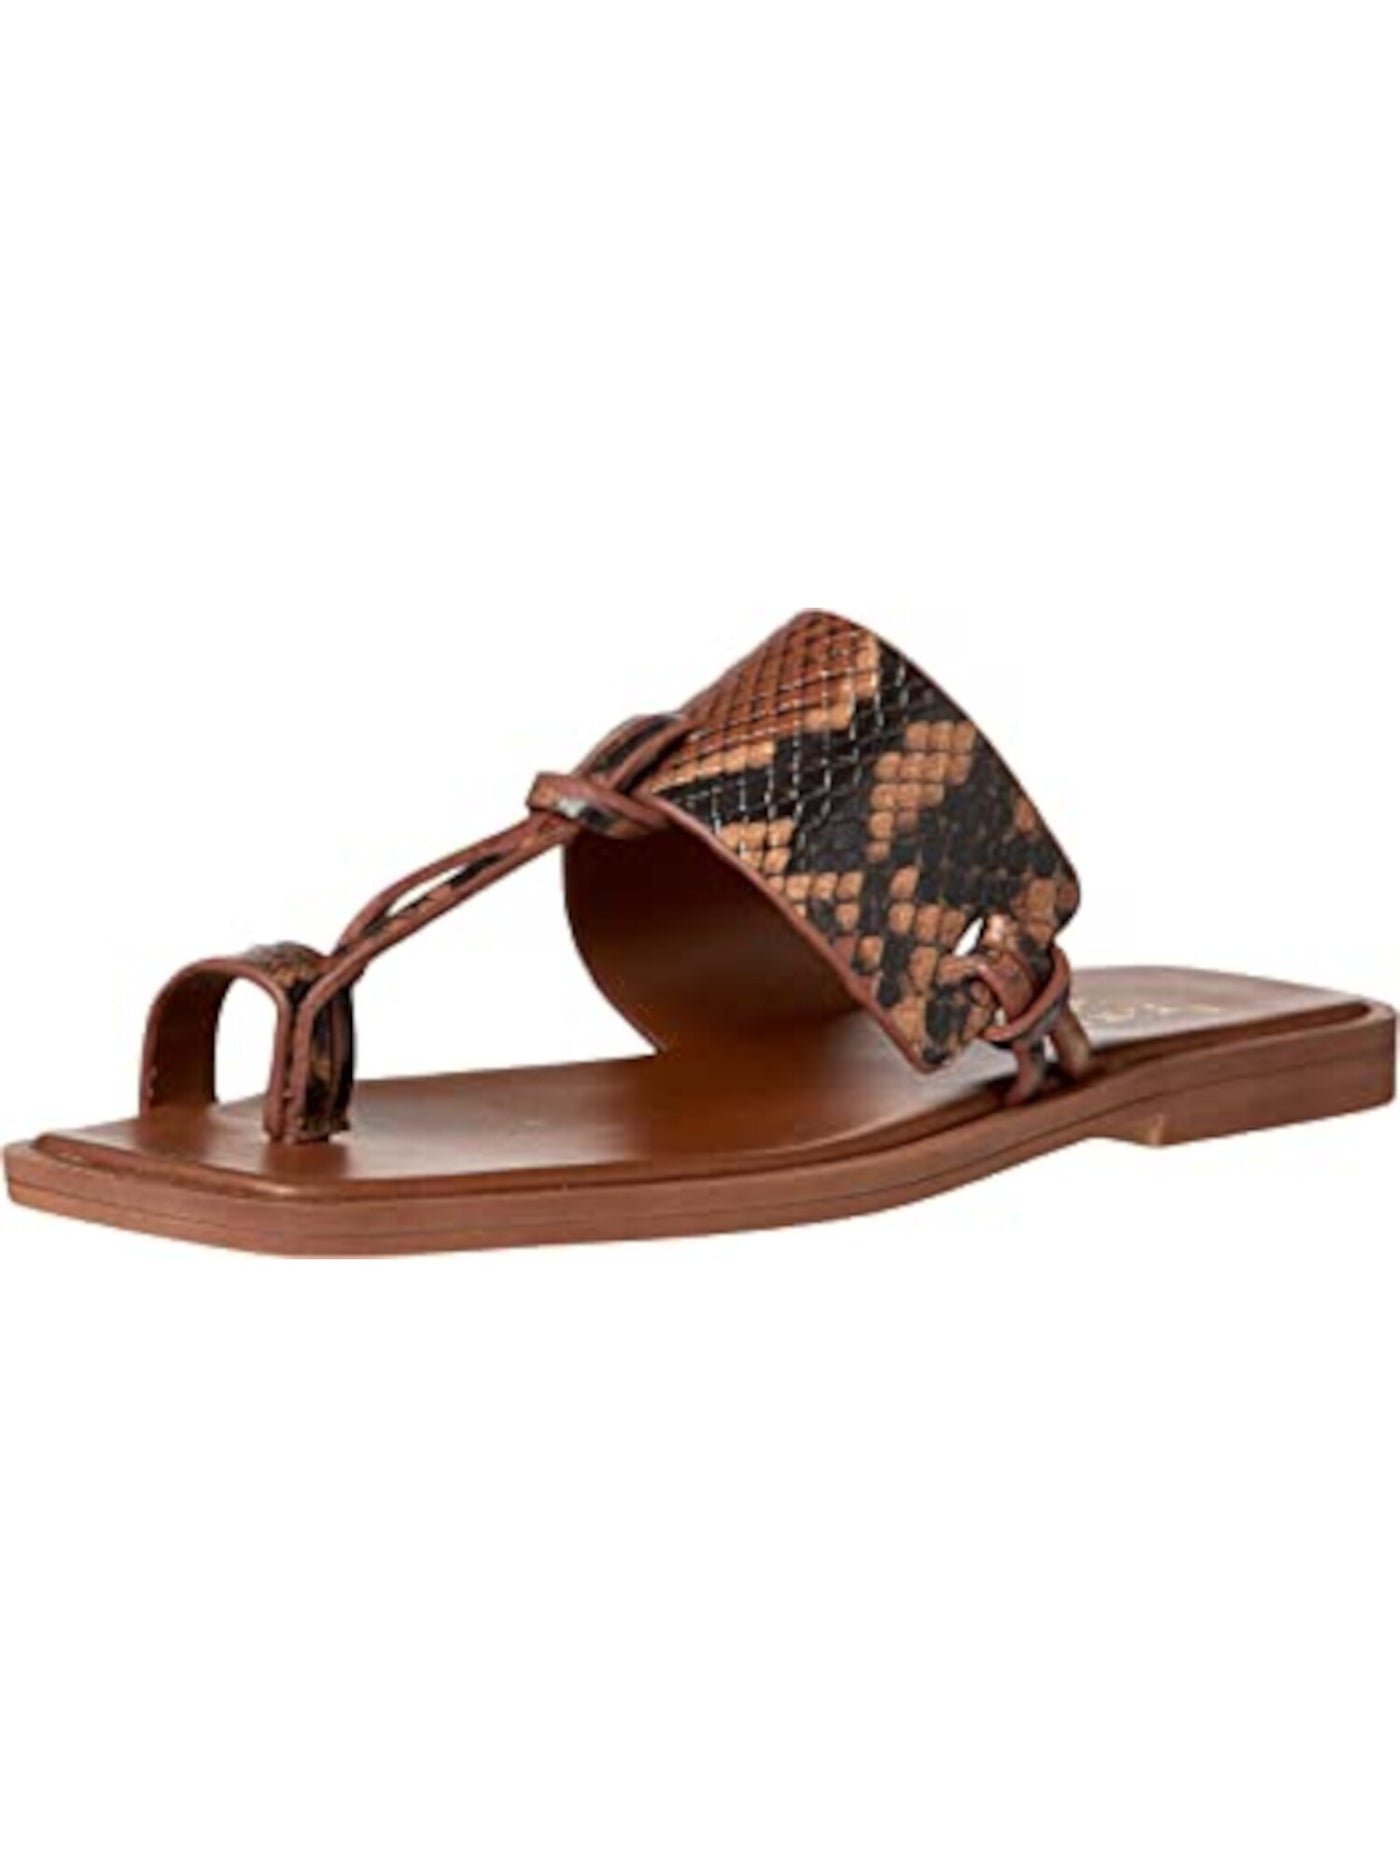 FRANCO SARTO Womens Brown Snake Skin Toe Ring Milly Square Toe Slip On Slide Sandals Shoes 5 M